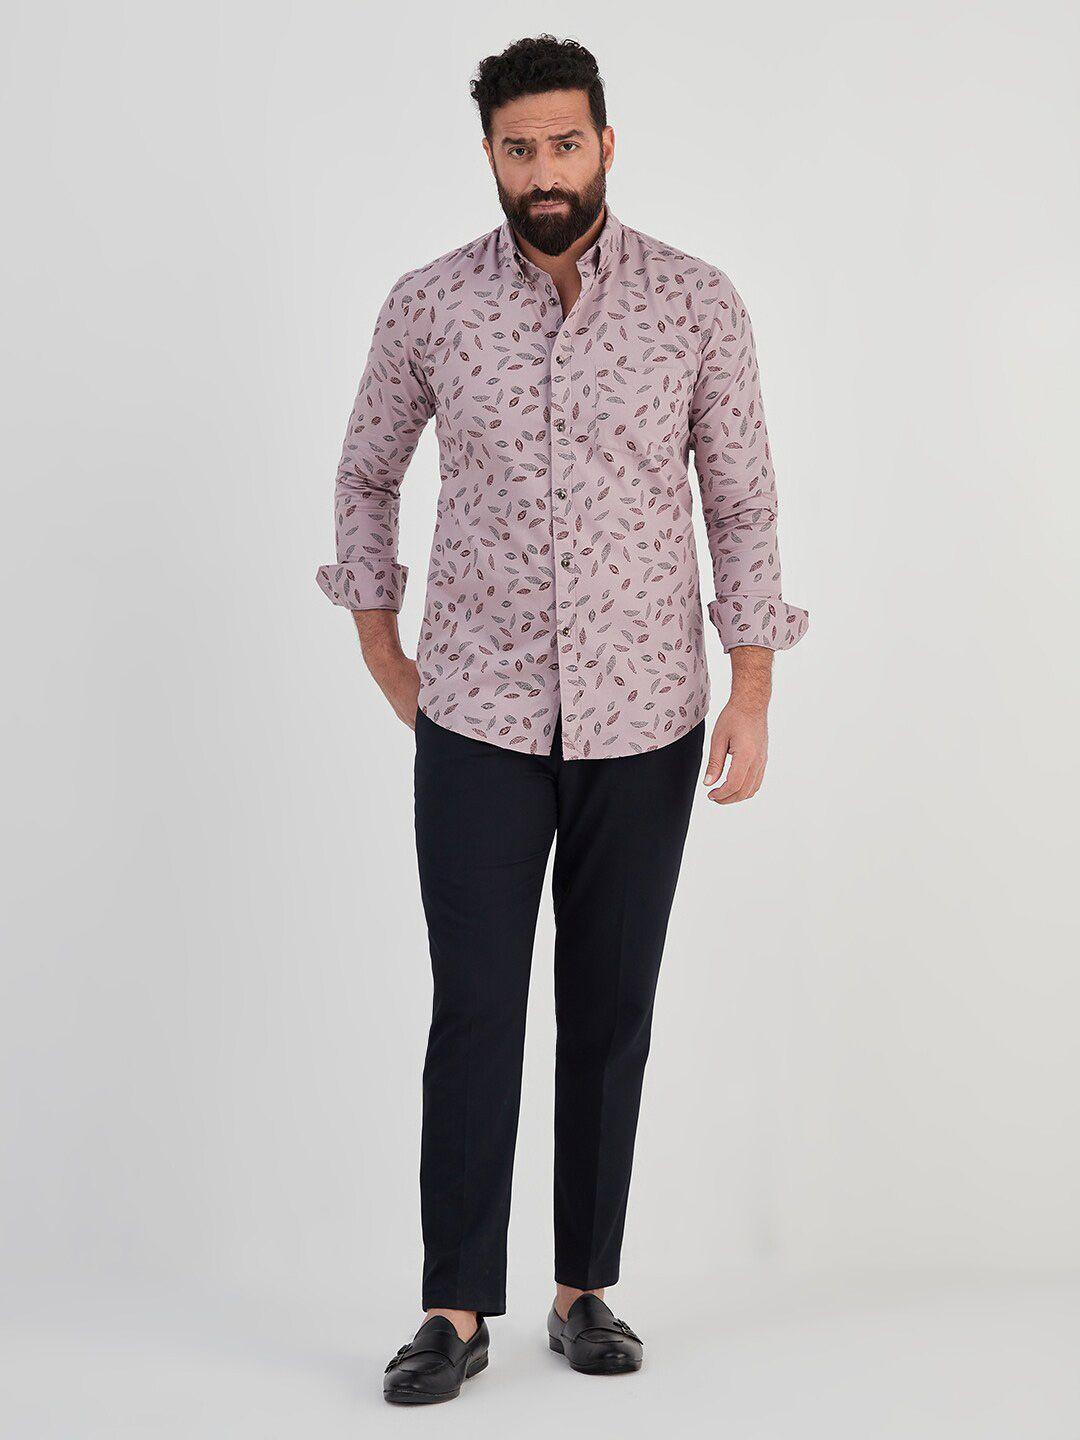 mr button men slim fit conversational printed casual cotton shirt